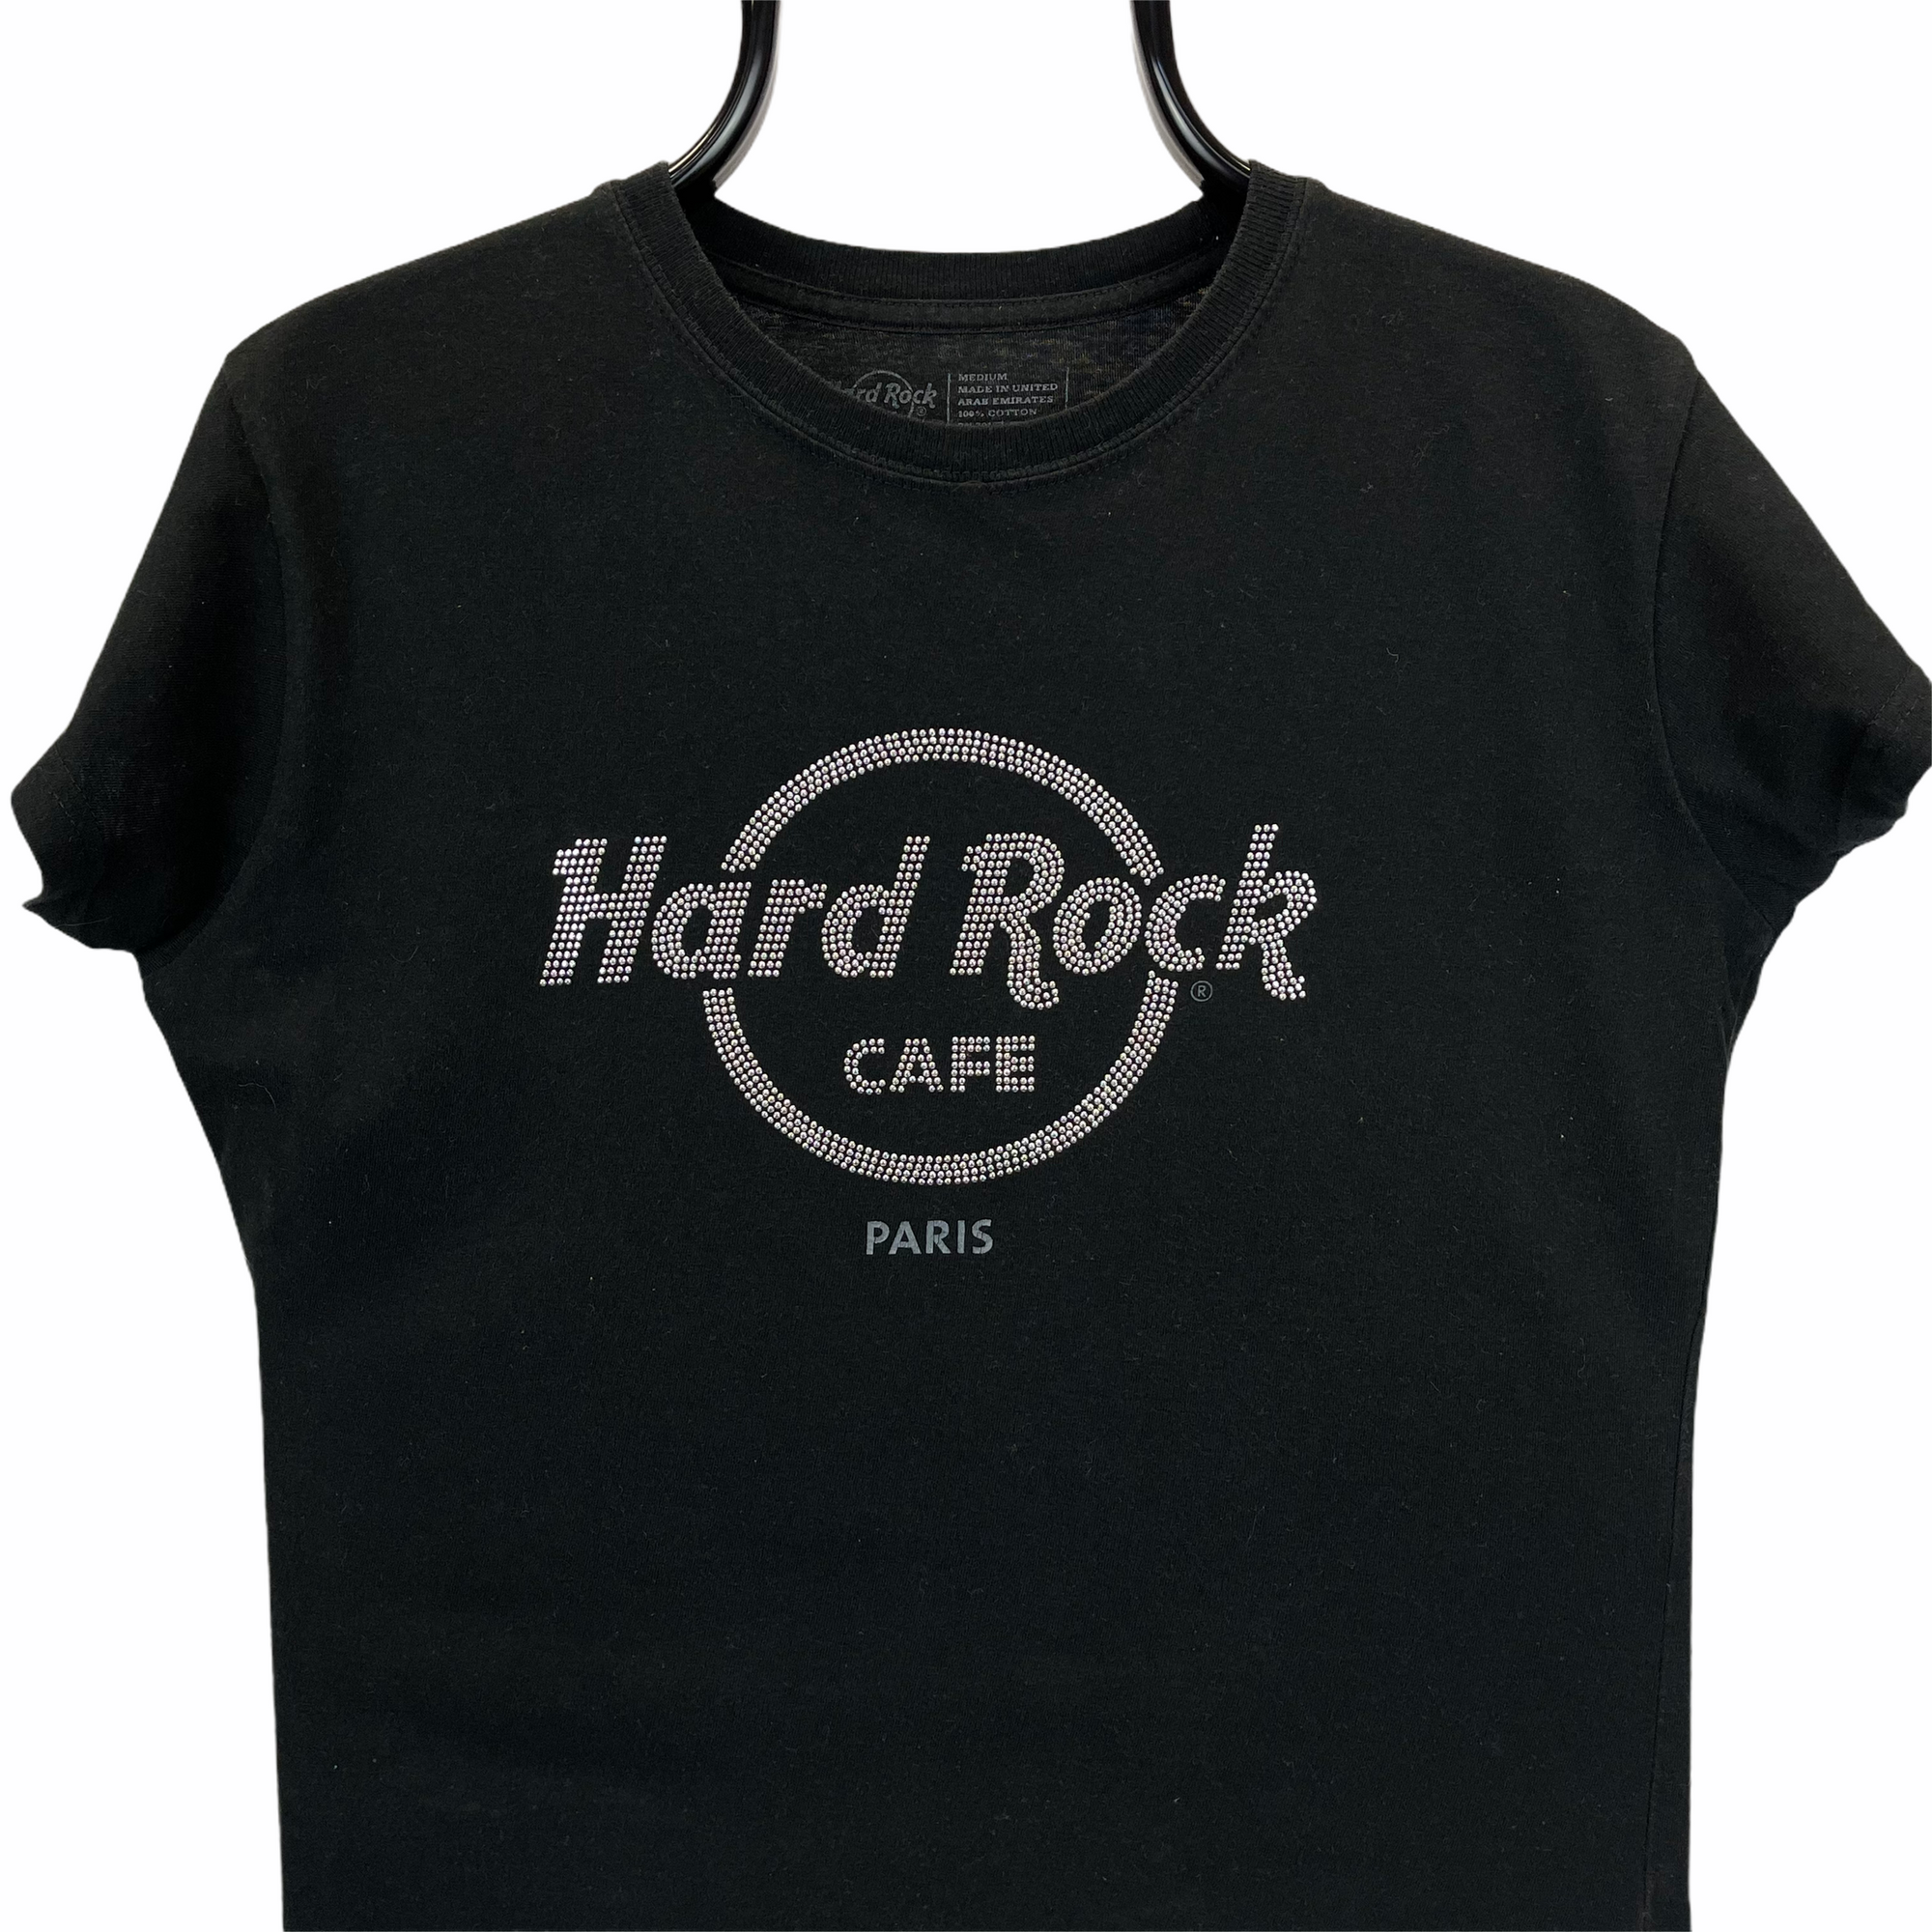 Vintage Hard Rock Cafe Paris Jewel Tee - Men's XS/Women's Small